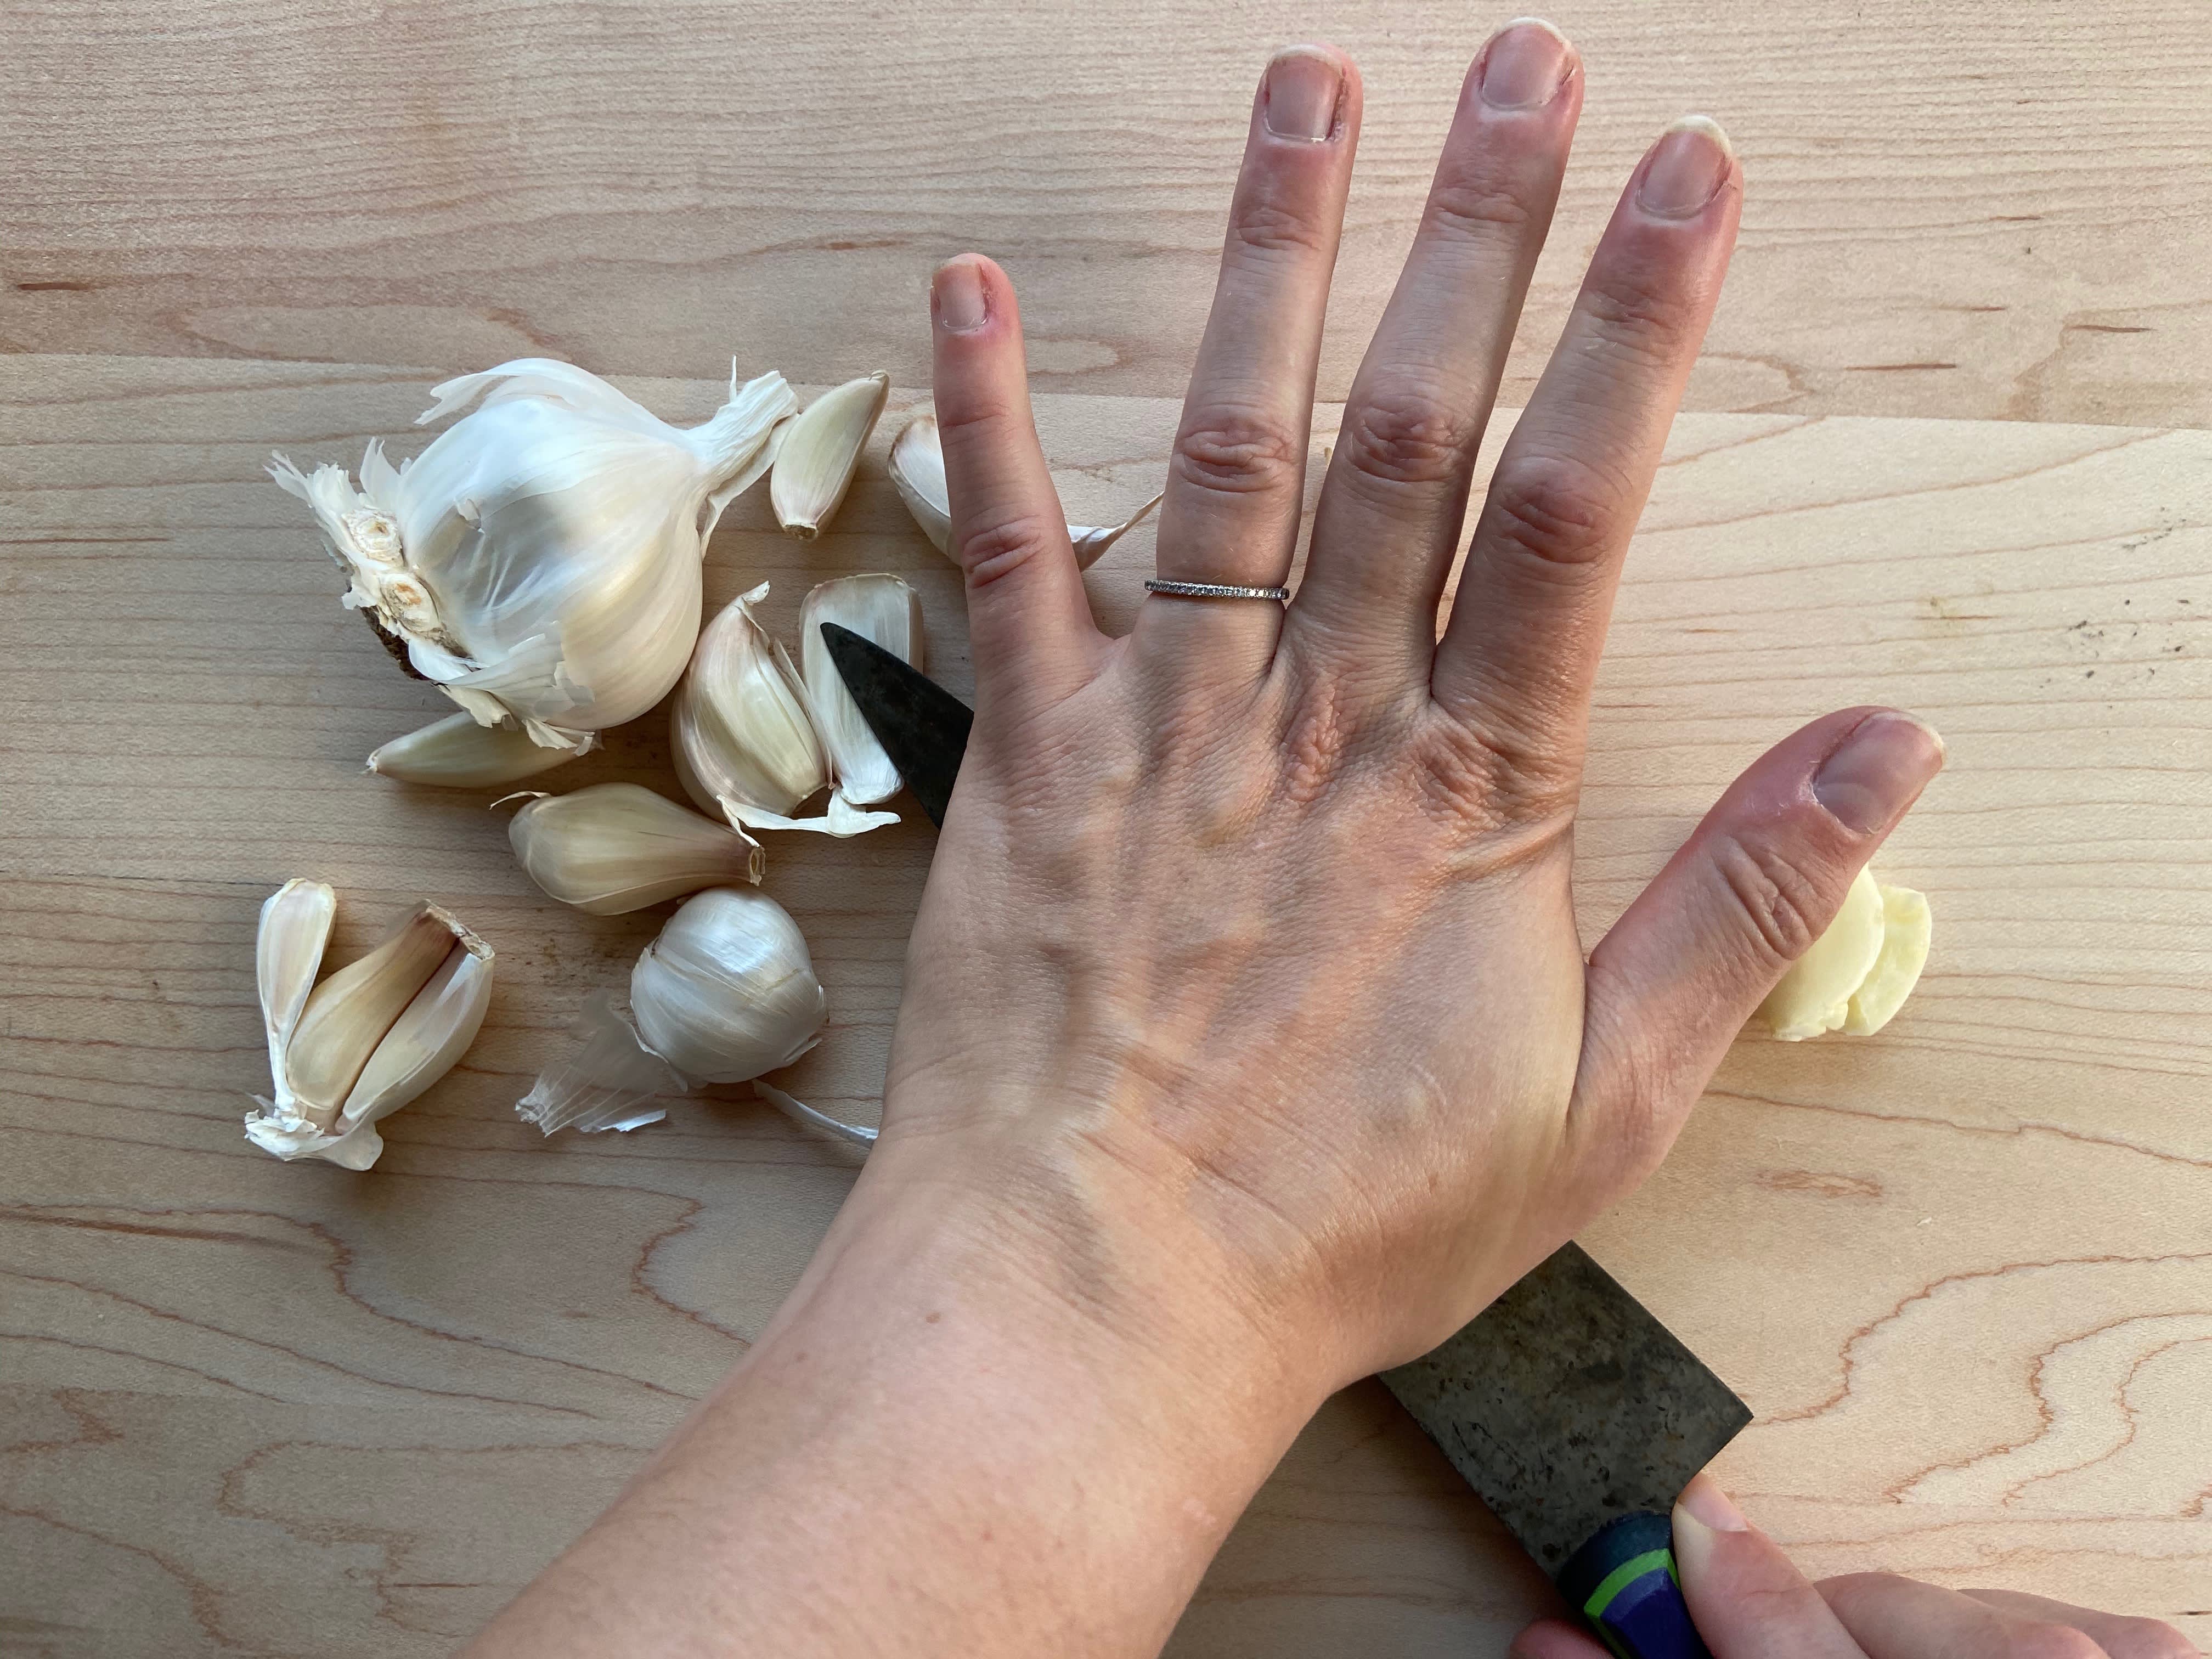 https://cdn.apartmenttherapy.info/image/upload/v1602267795/k/Photo/Series/2020-10-Skills-Showdown-The-Best-Method-for-Peeling-Garlic/2020-10-skills-show-down-garlic-Meghan-method-shots/IMG_5724.jpg